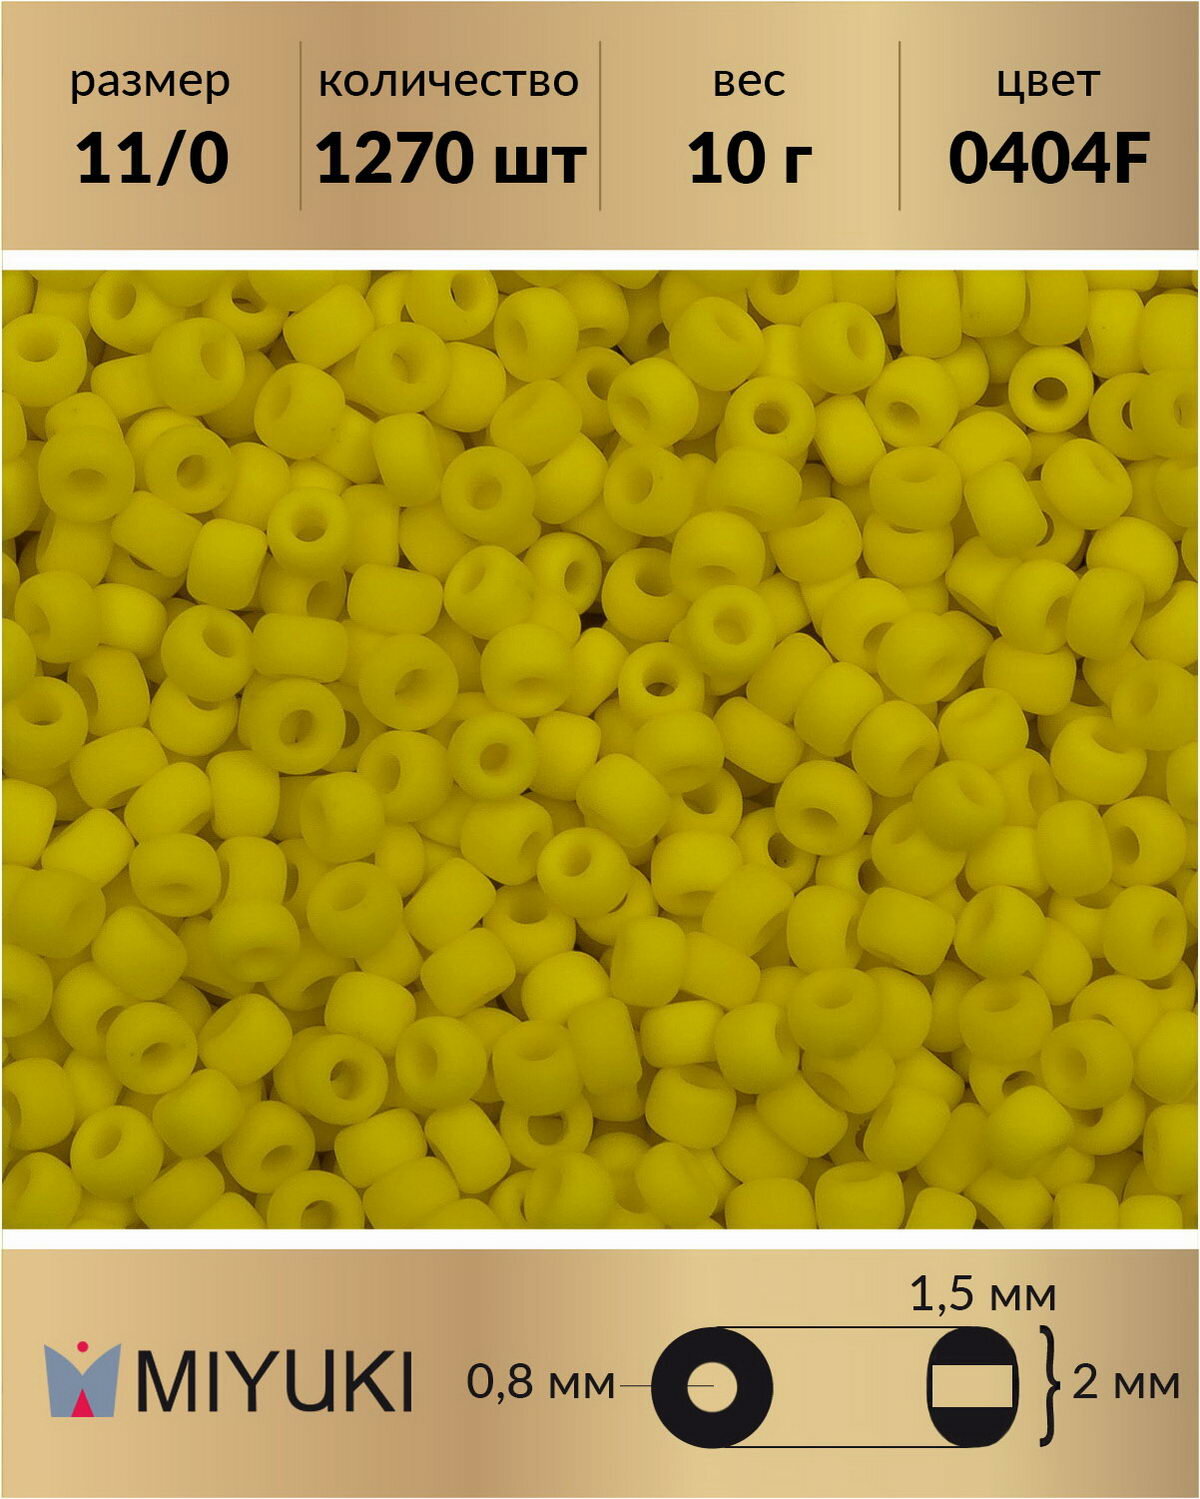 Бисер Miyuki, размер 11/0, цвет: Матовый непрозрачный желтый (0404F), 10 грамм